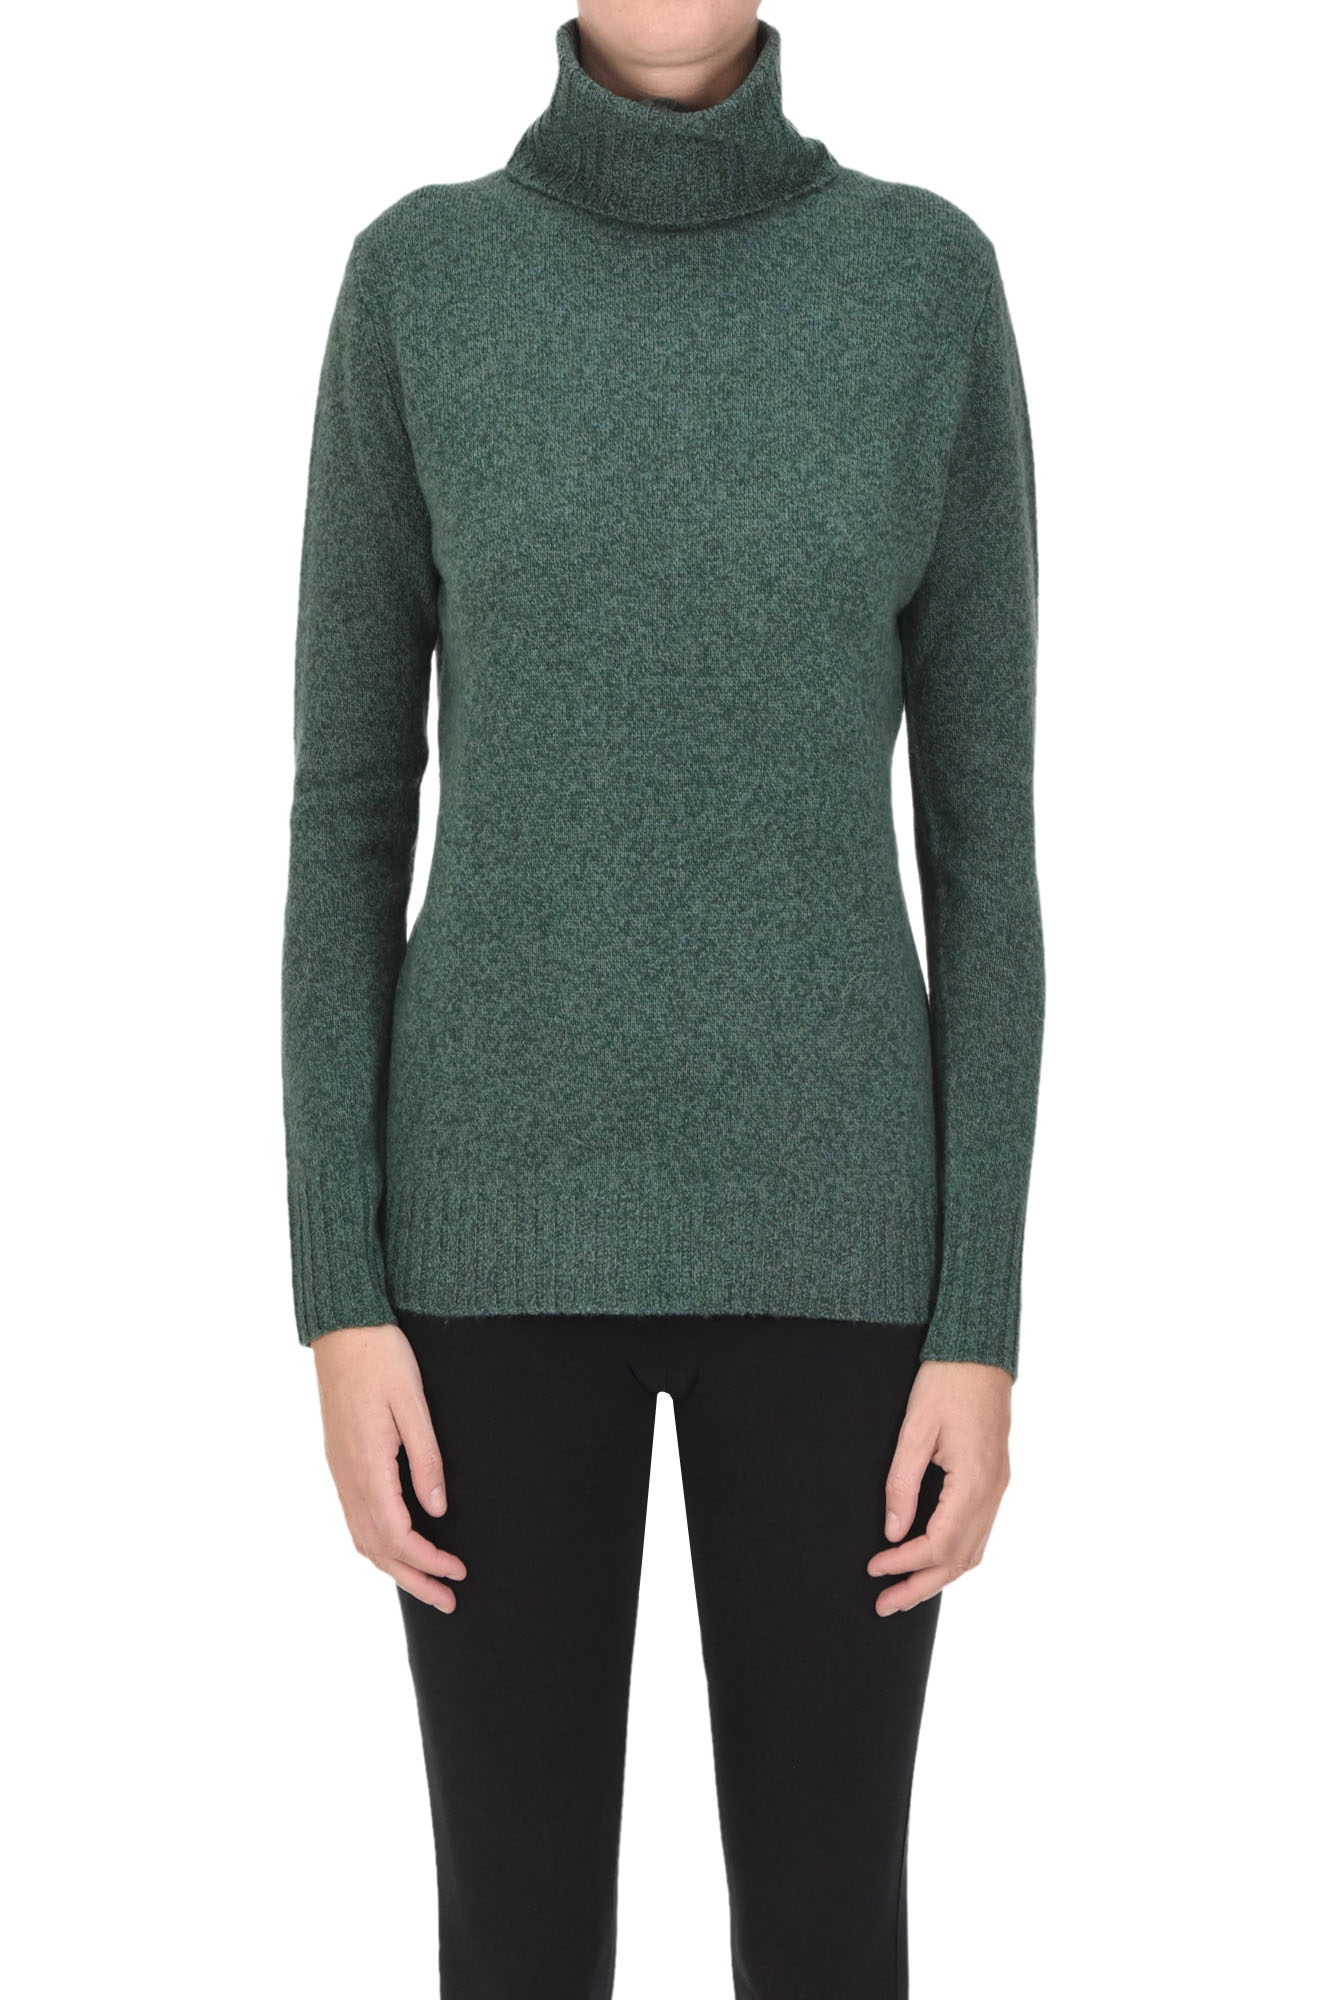 Aspesi Melange Knit Turtleneck Pullover In Dark Green